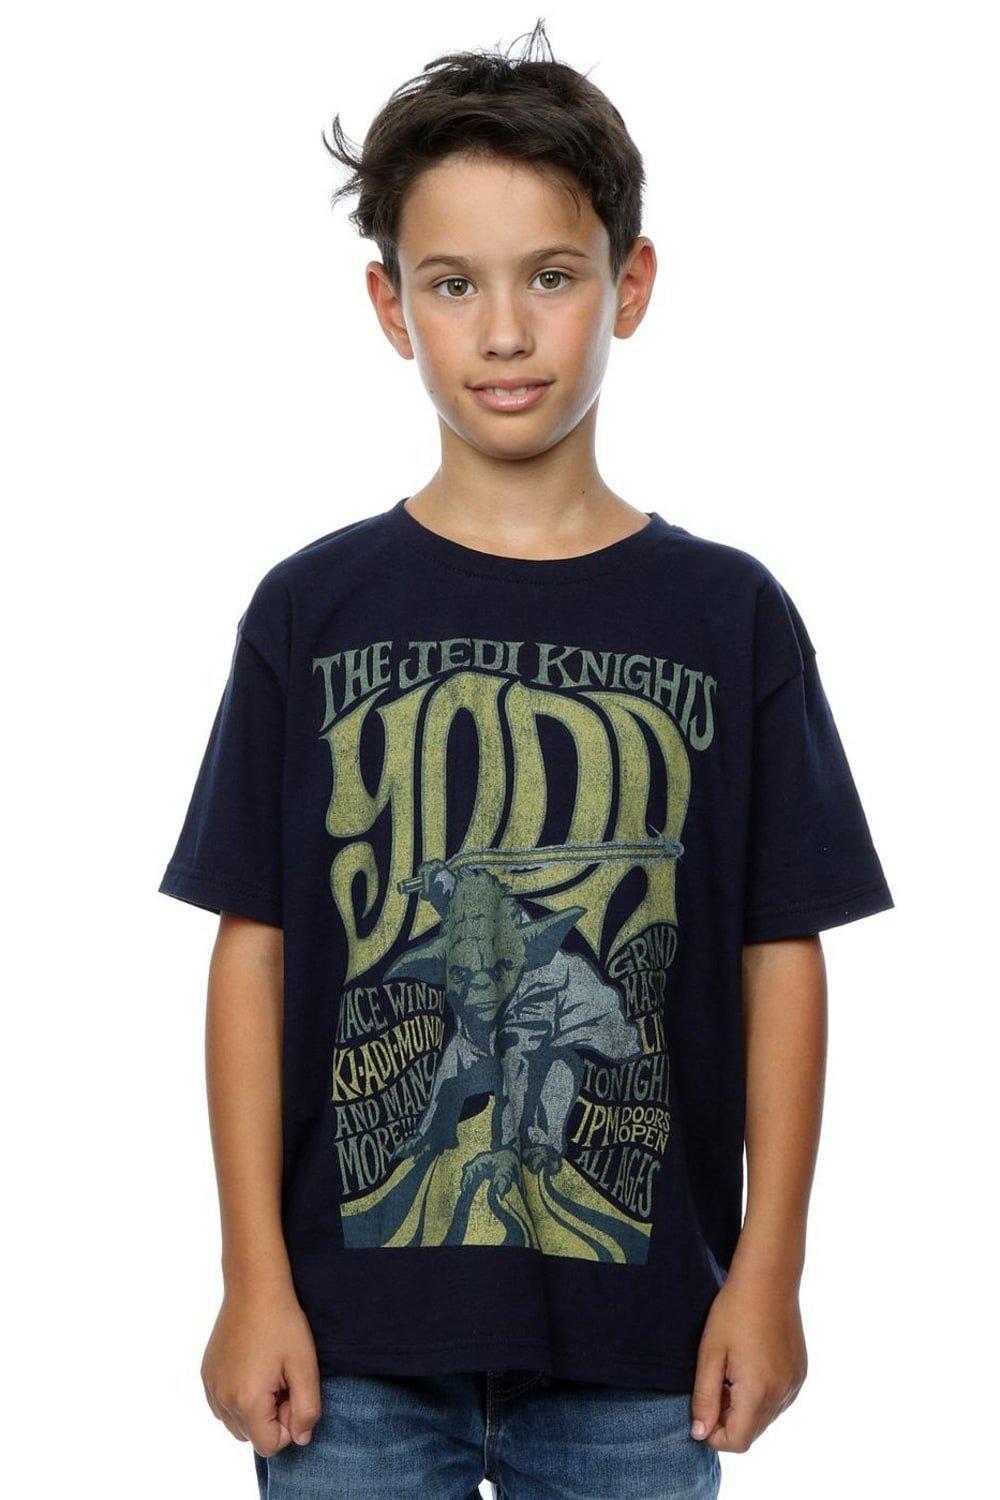 Yoda Rock Poster T-Shirt